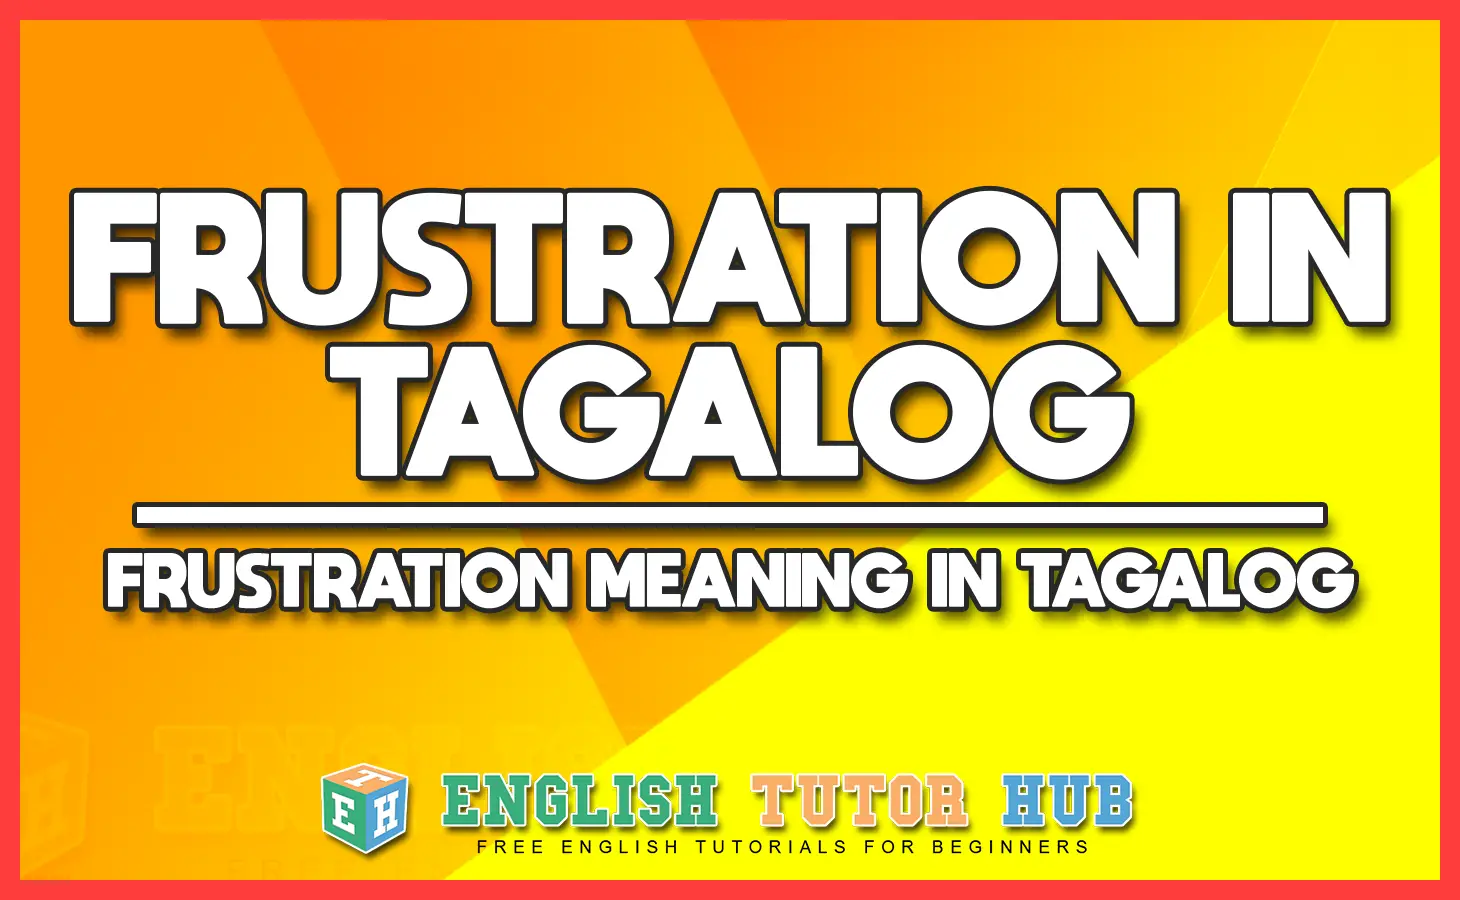 FRUSTRATION IN TAGALOG - FRUSTRATION MEANING IN TAGALOG